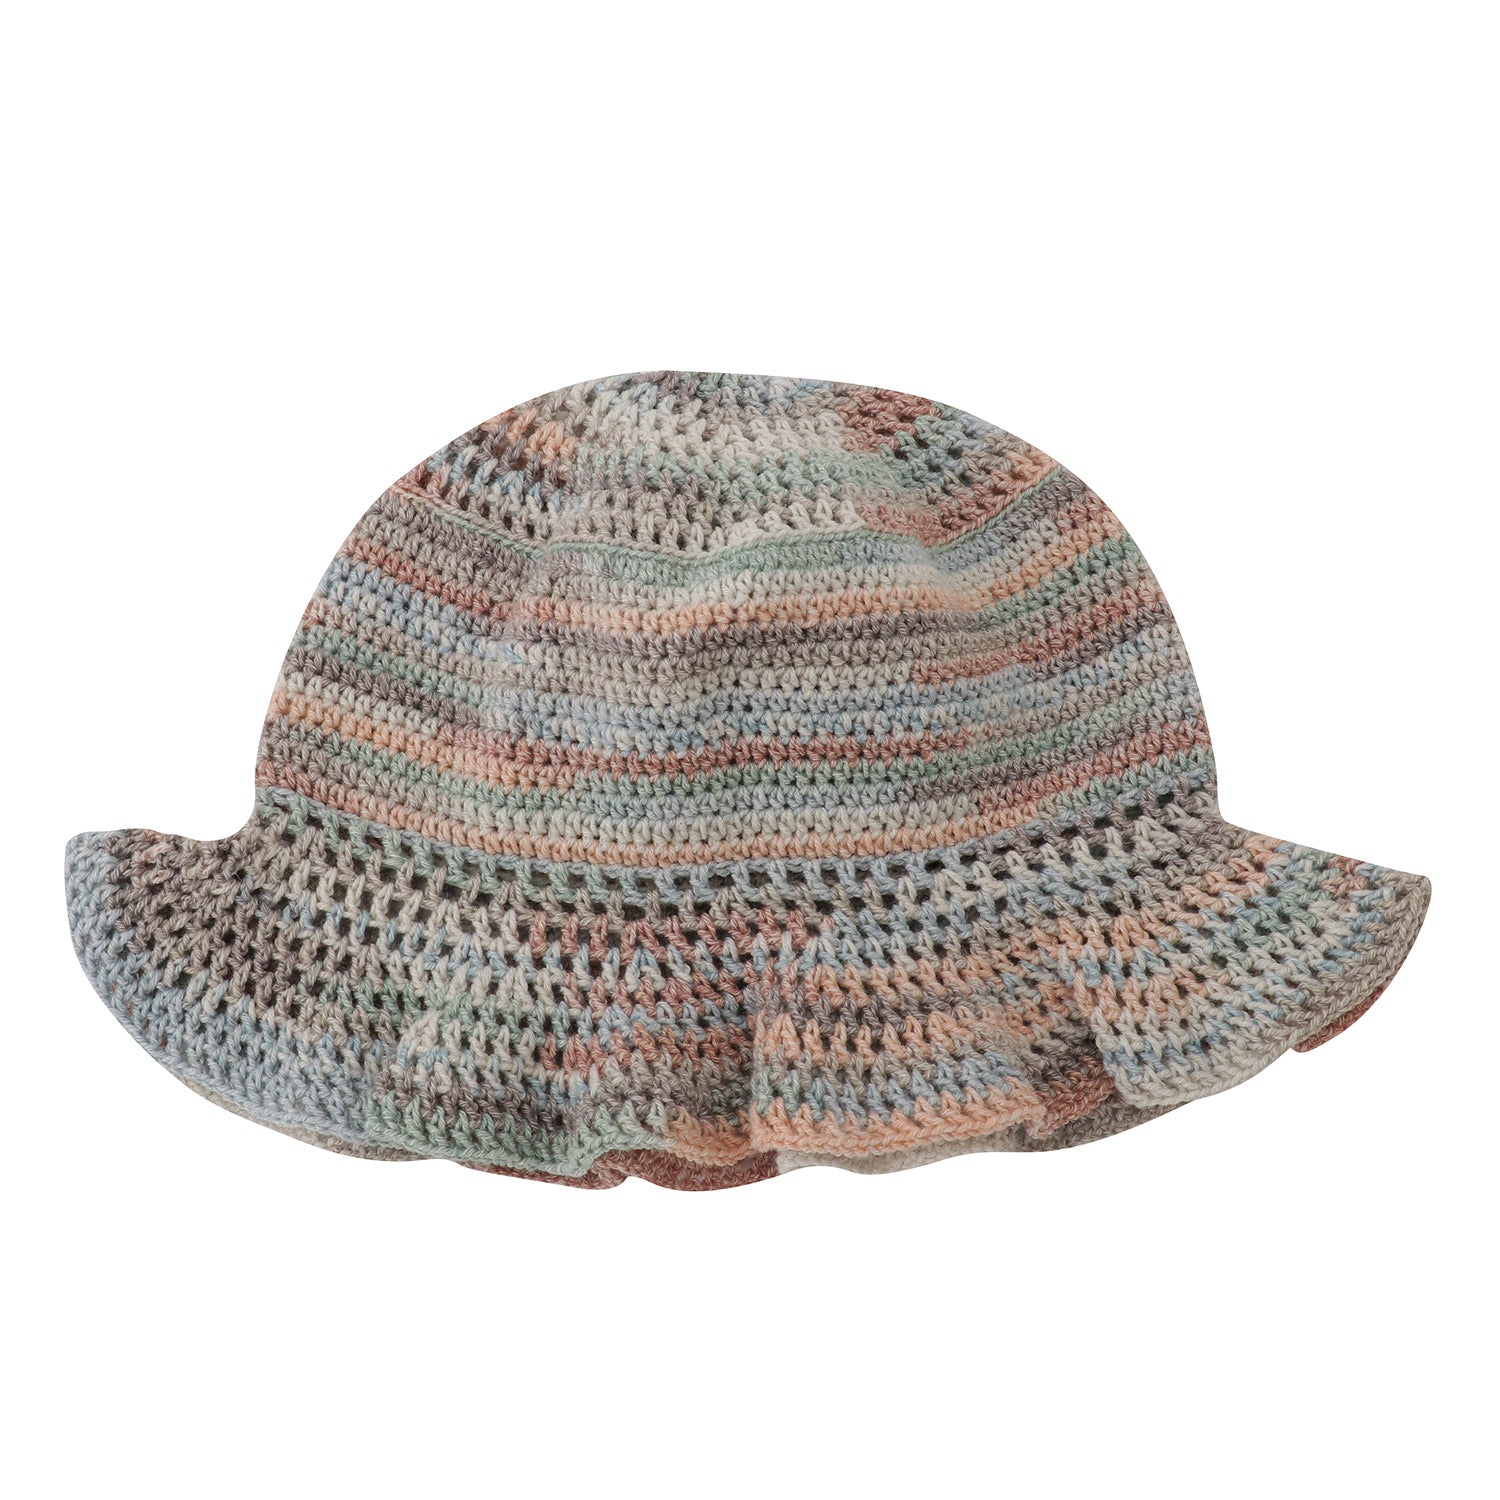 soonerorlater hand knitted bucket hat-